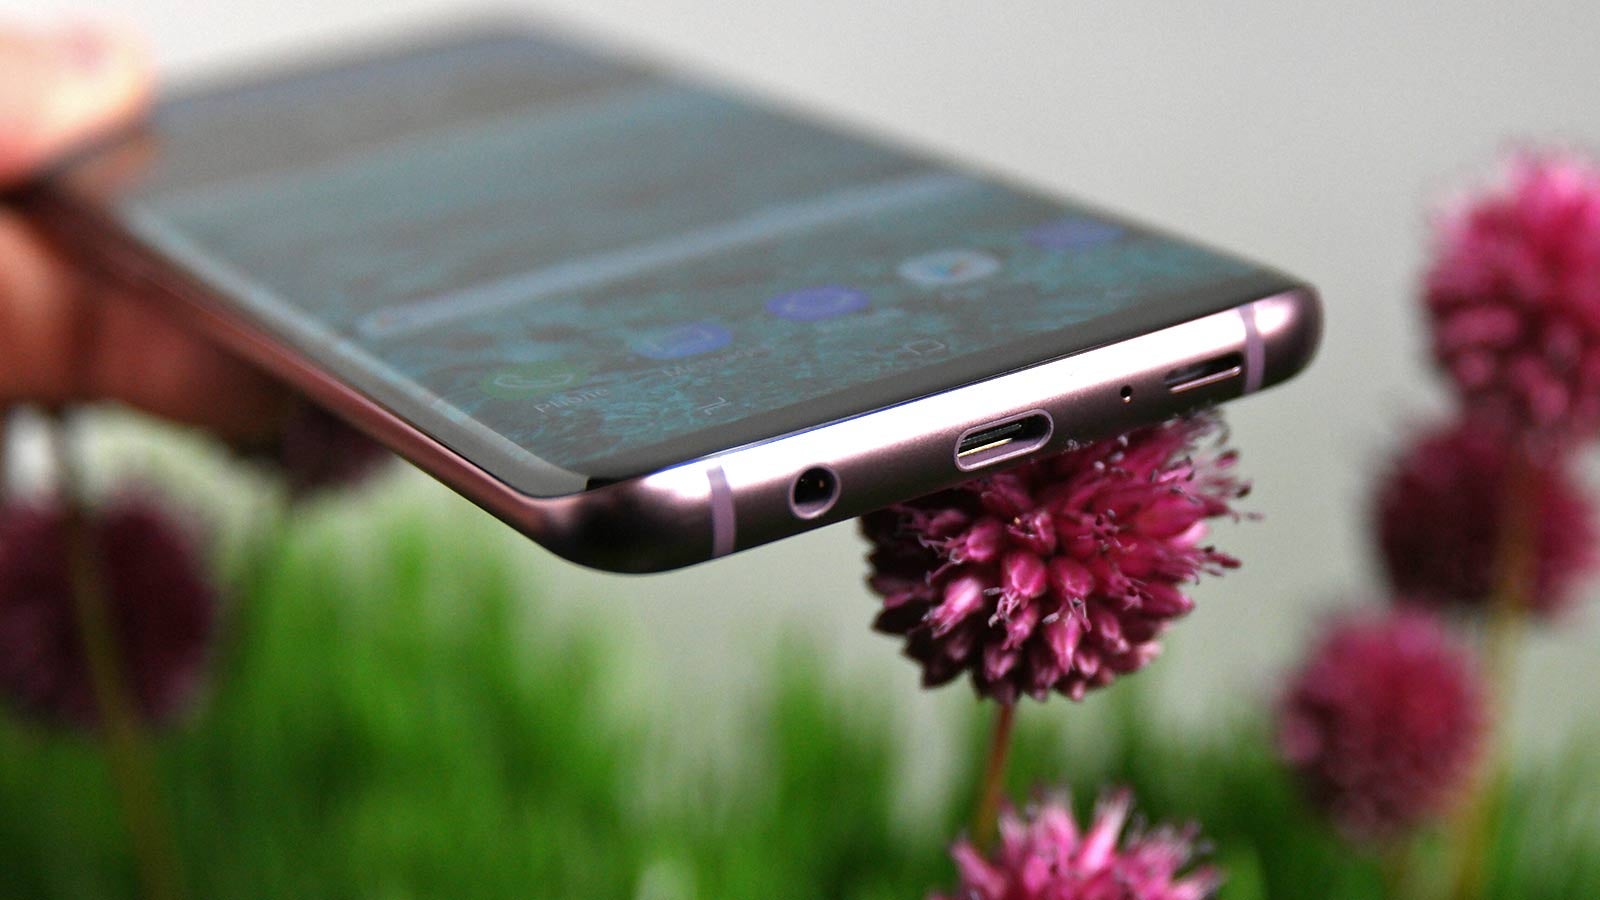 Samsung Galaxy S9 Vs S8: What’s New?